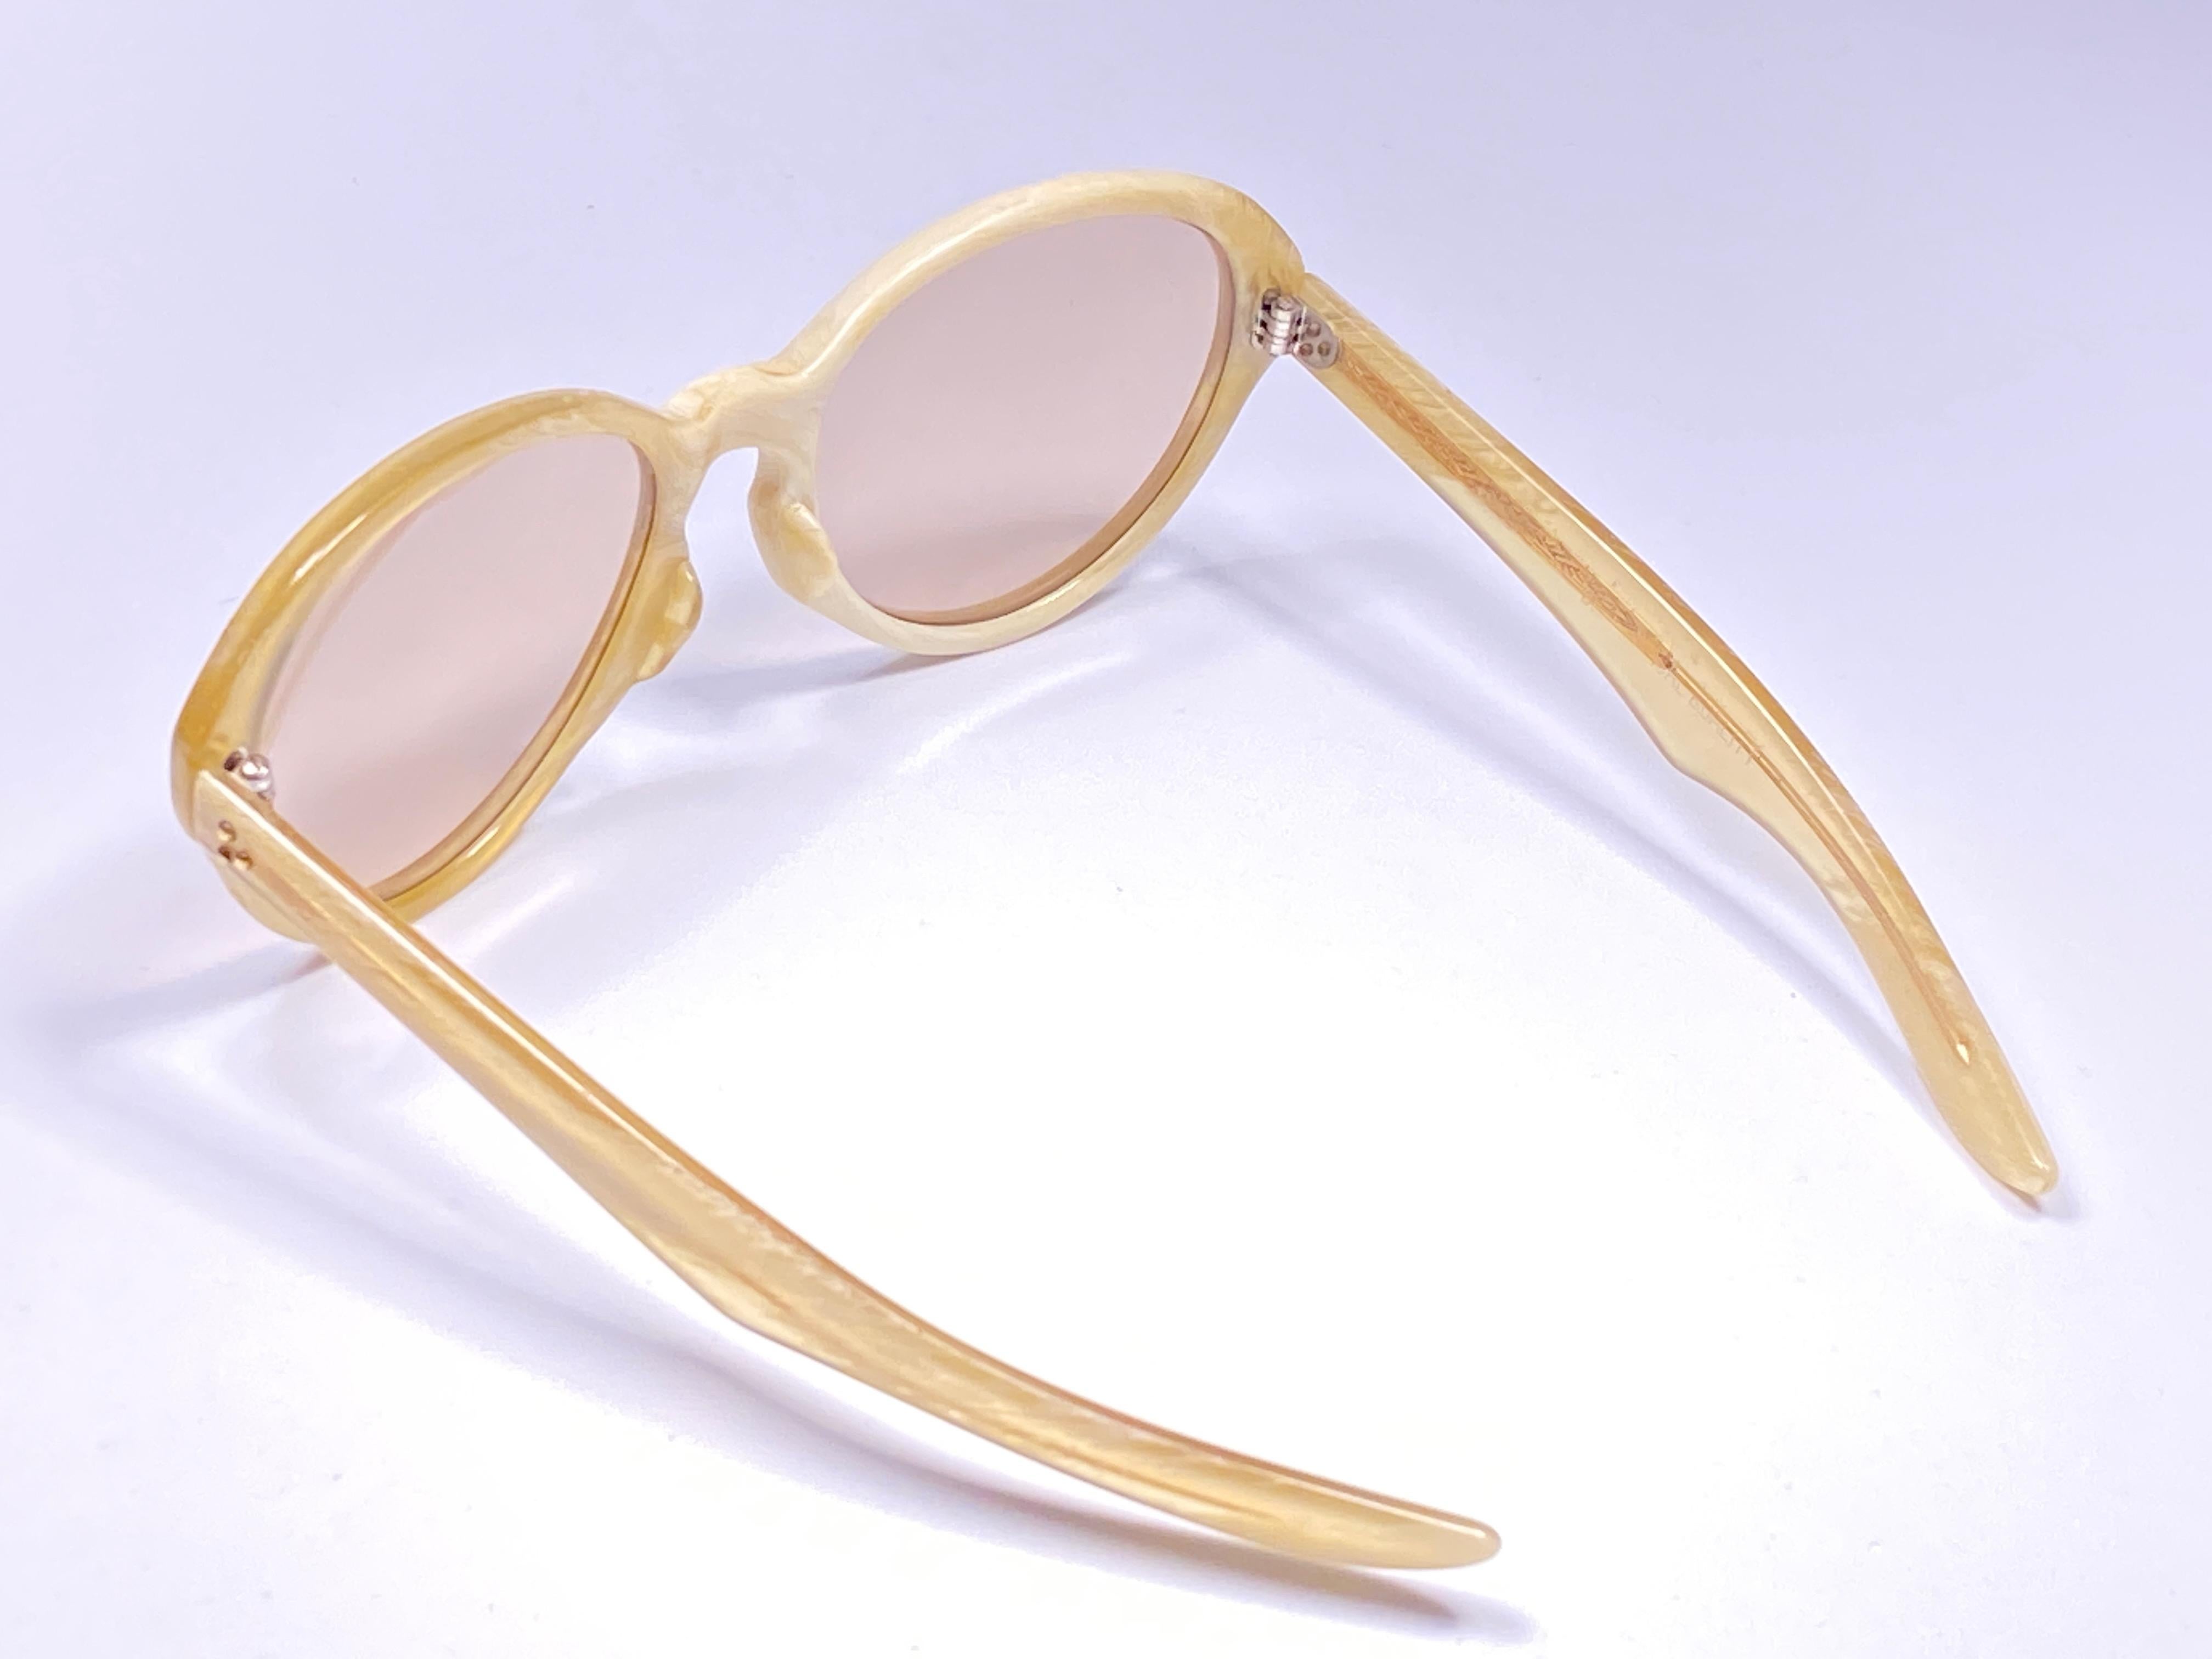 Vintage Rare A.A Sutain Oversized Beige Undertones Sunglasses 1970's 1